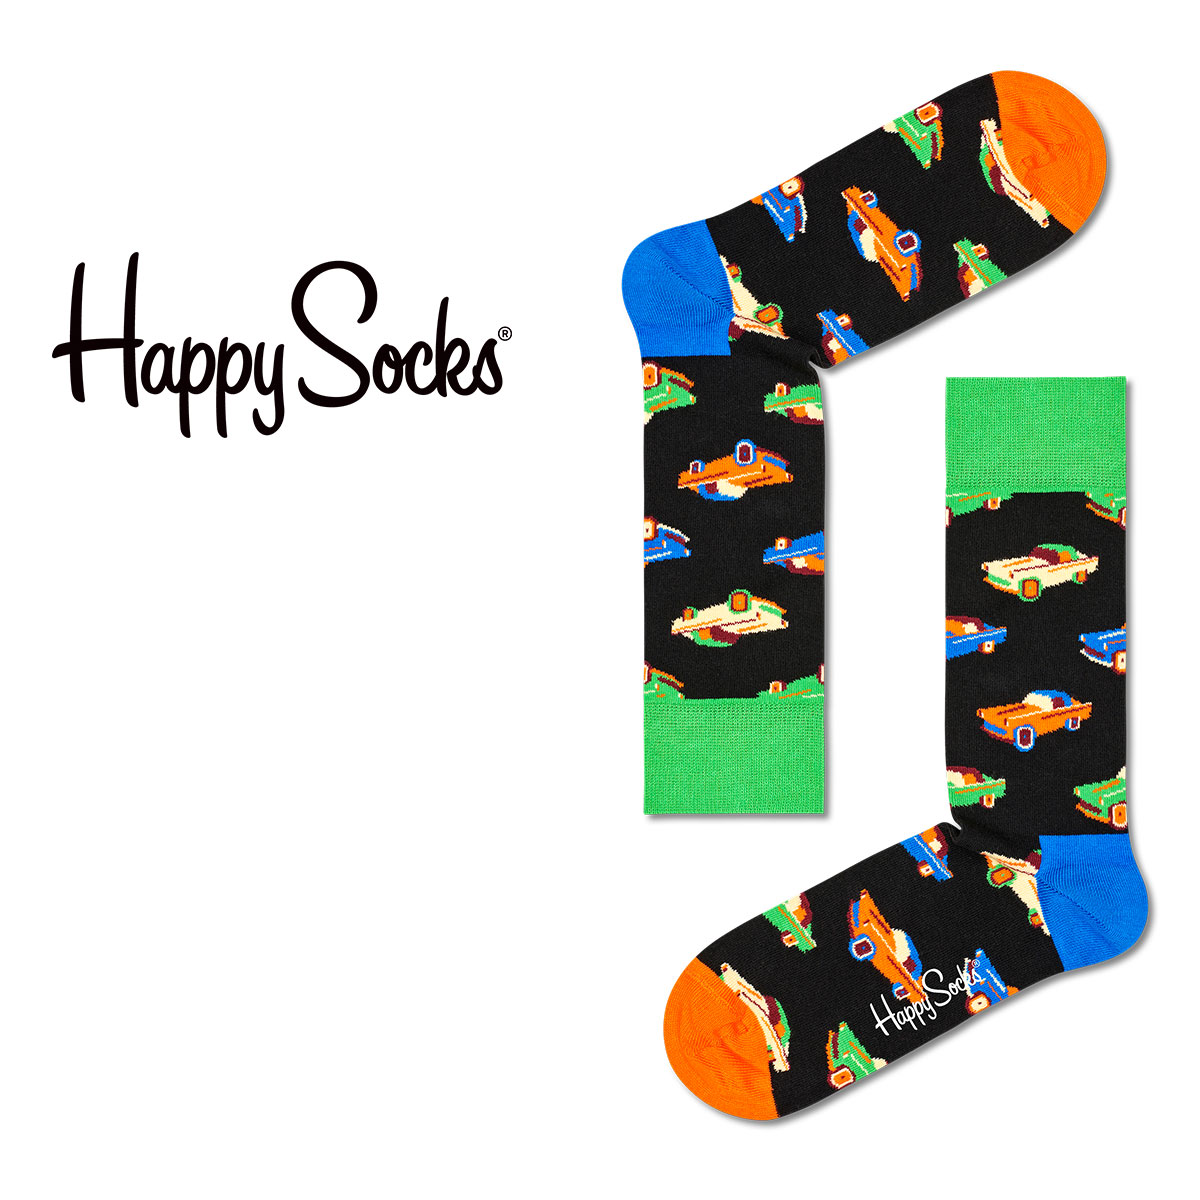 【24SS】Happy Socks ハッピーソックス Car （ カー ） クルー丈 ソックス ユニセックス メンズ ＆ レディス 10240006